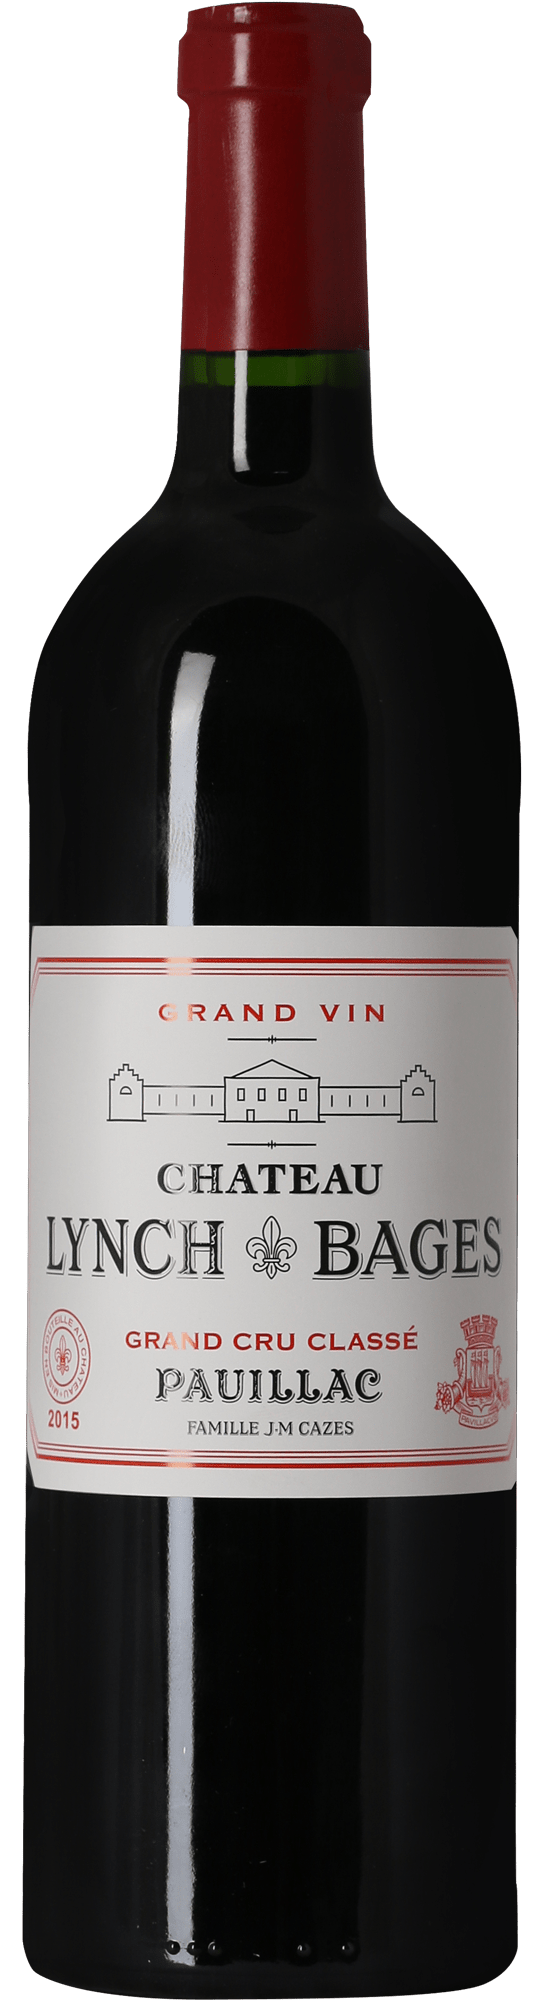 Chateau Lynch-Bages, Grand Cru Classe, 2015